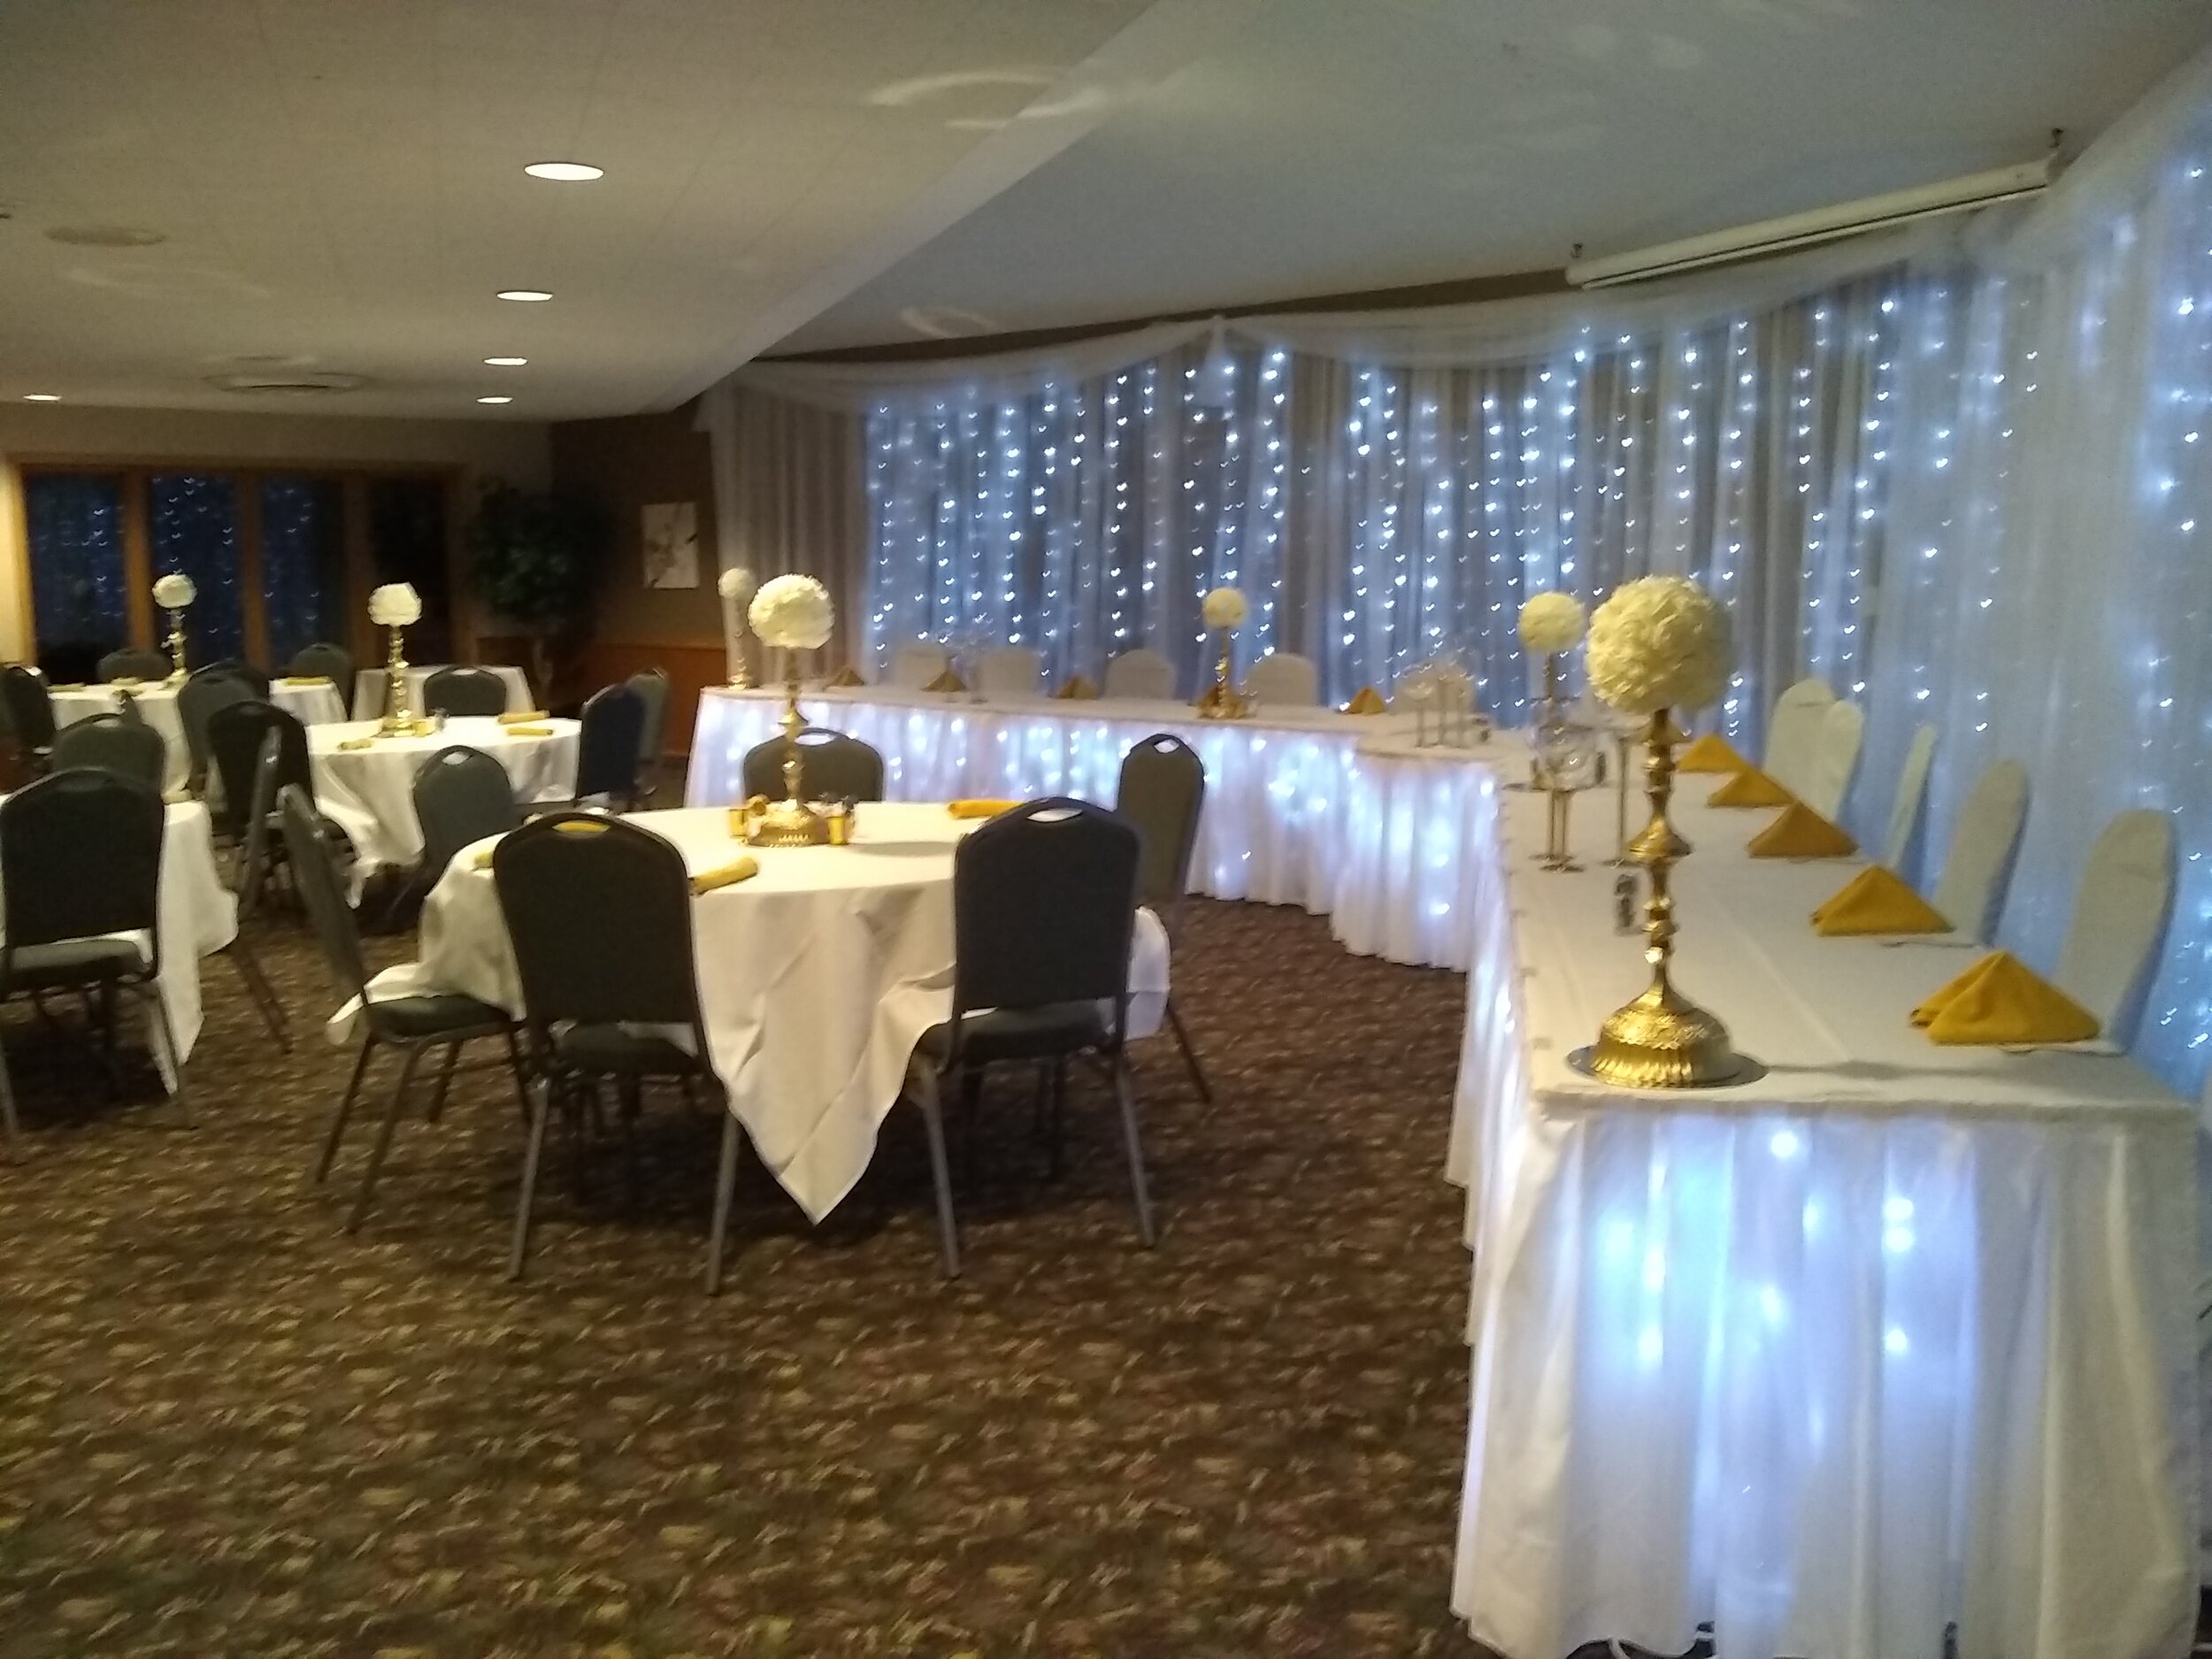 Pic of wedding room and lights.jpg